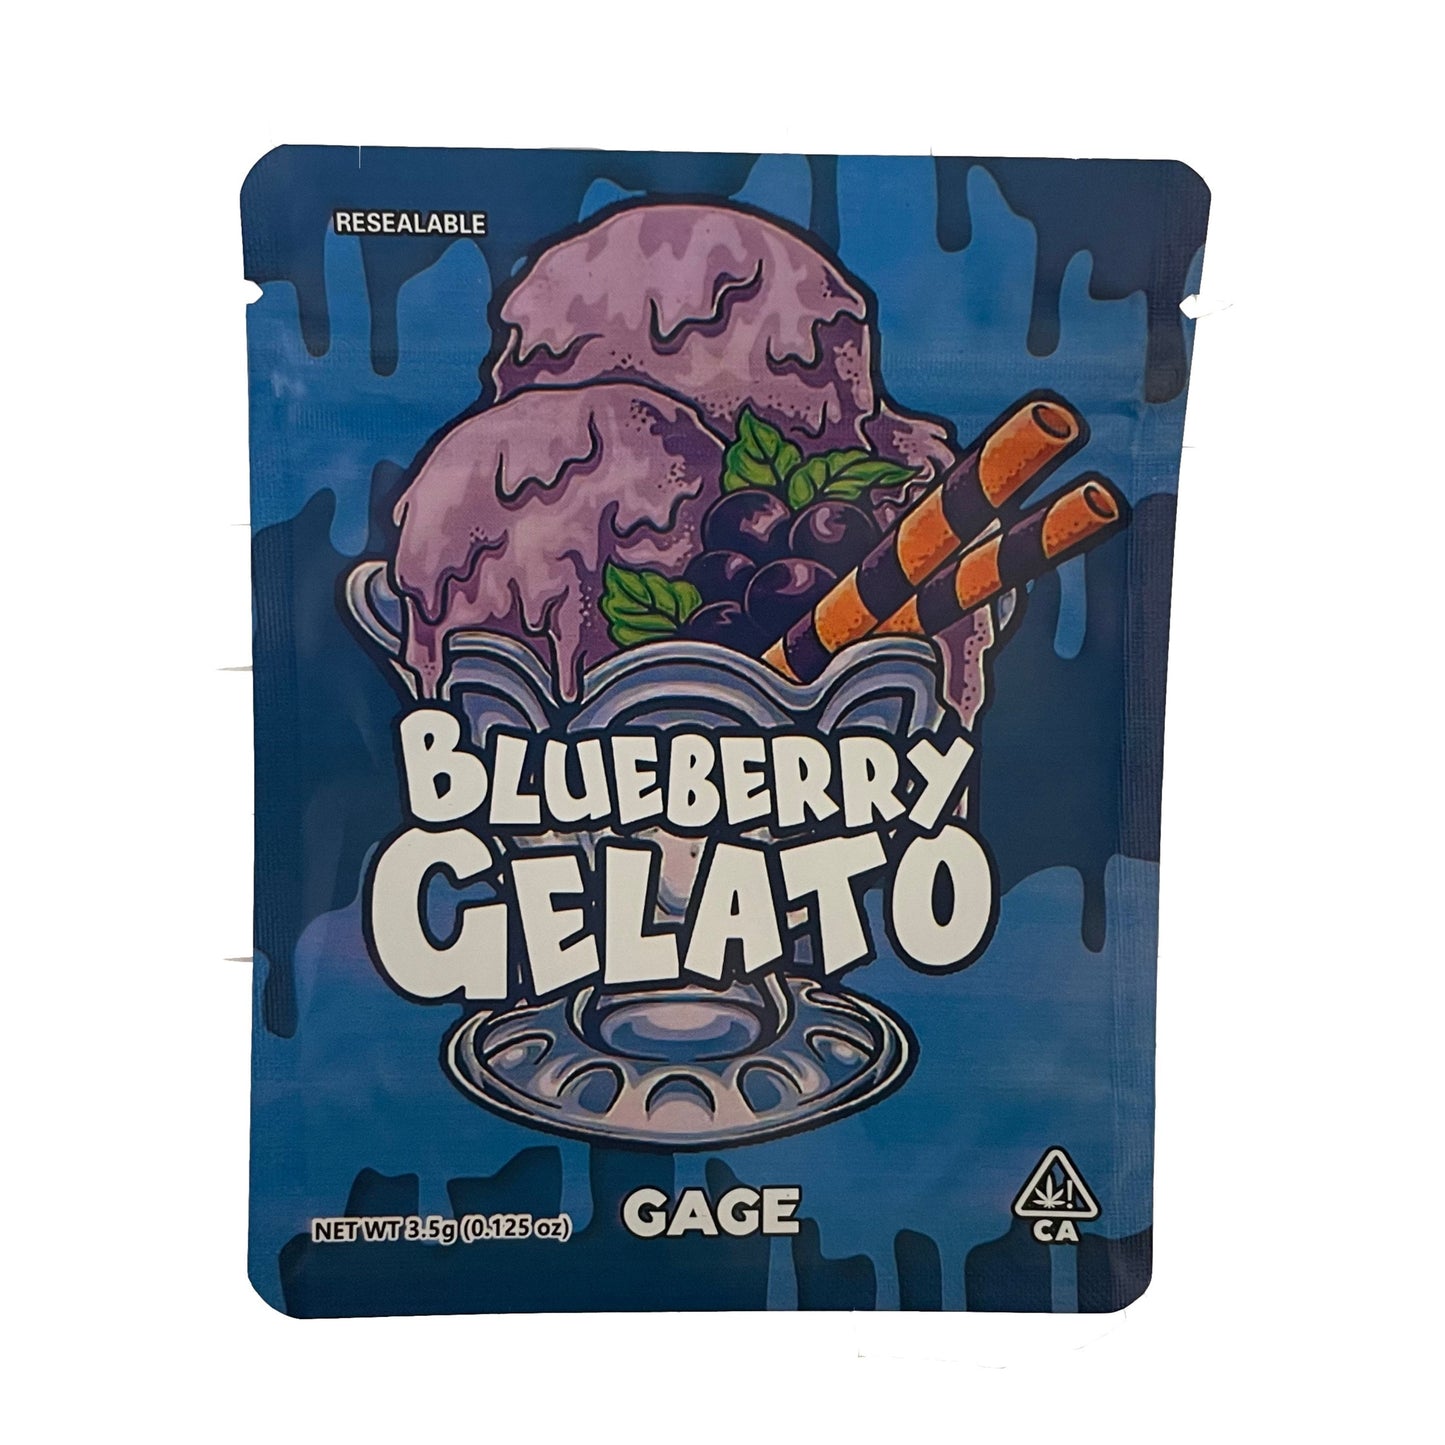 Blueberry Gelato Gage 3.5G Mylar Bags